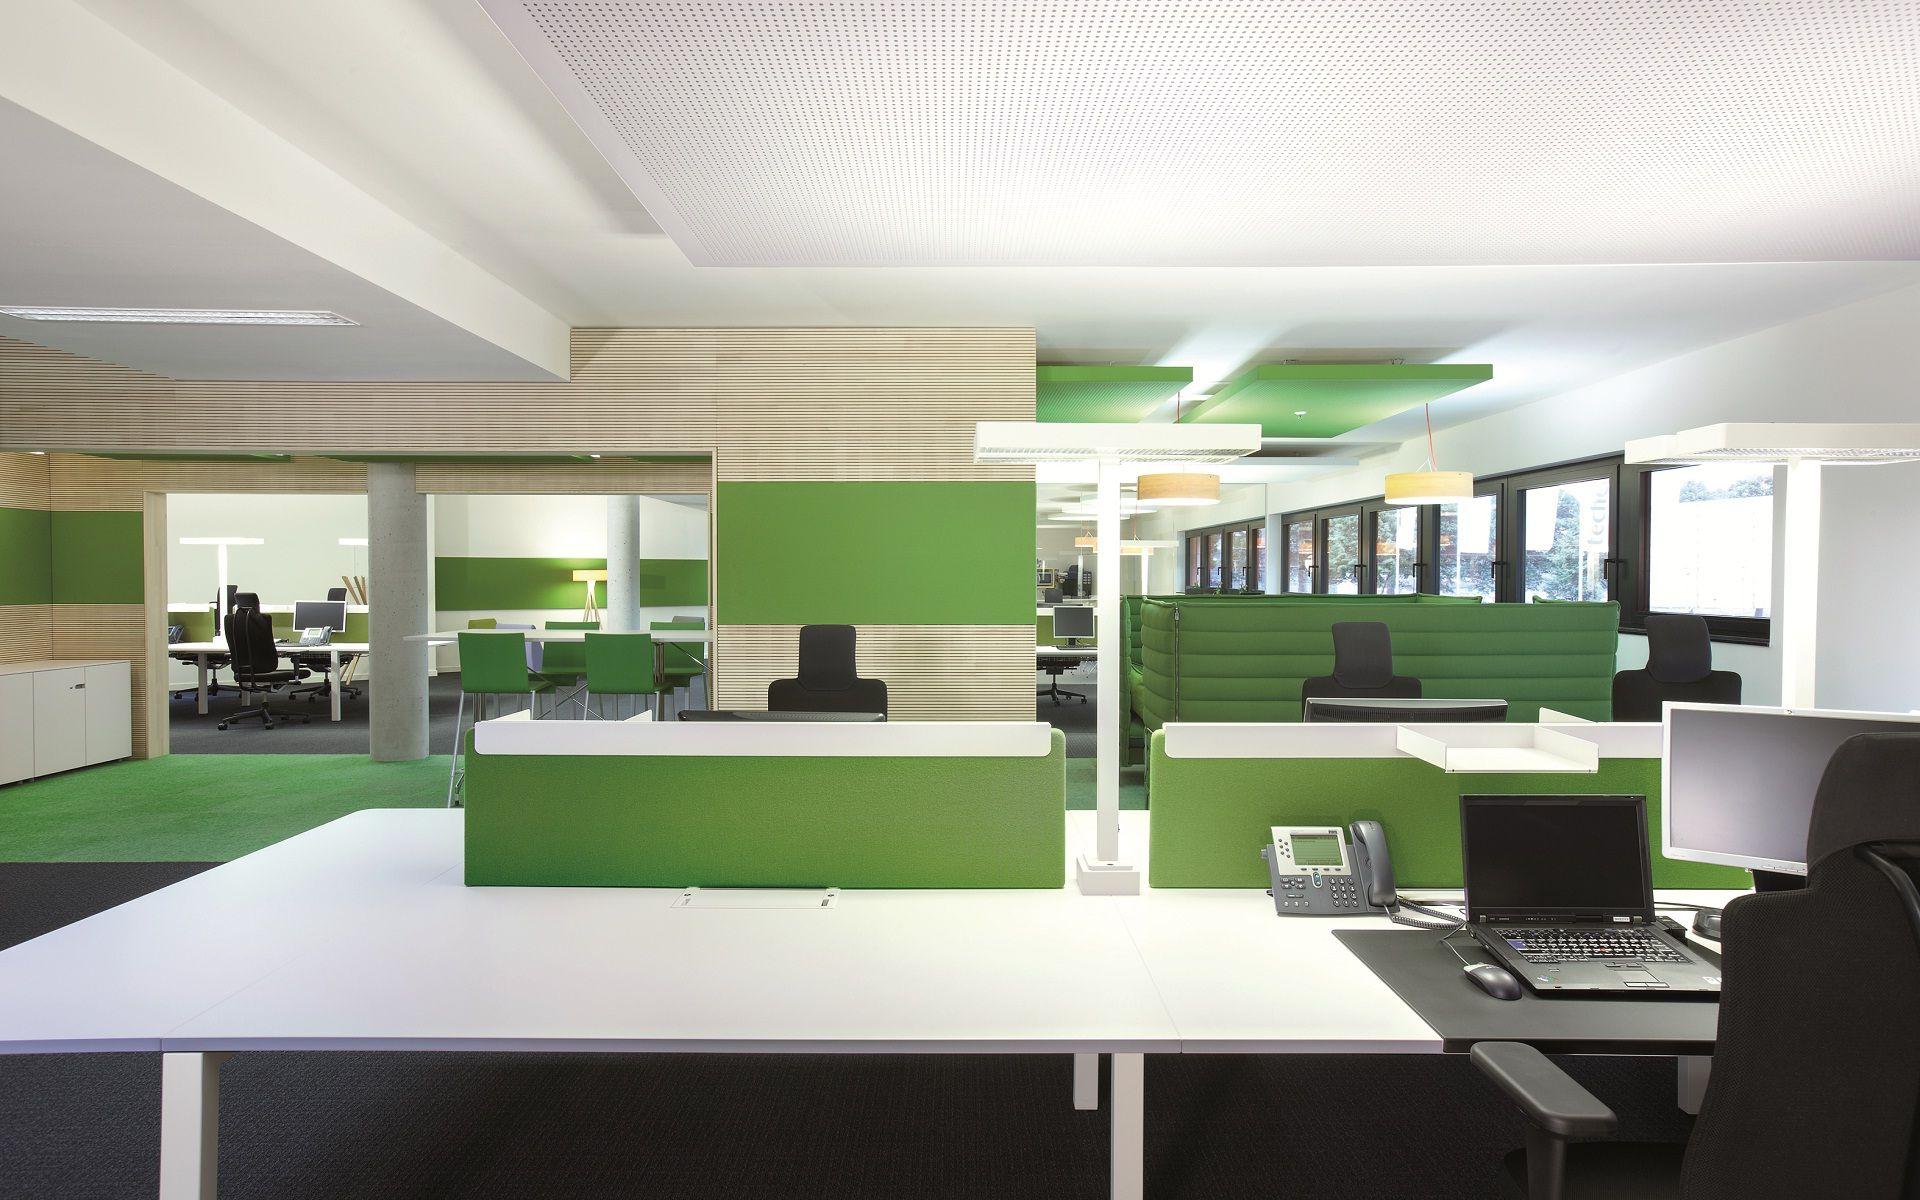 Office Wallpaper  Inspiring Office Decor Ideas for a Motivating Workspace